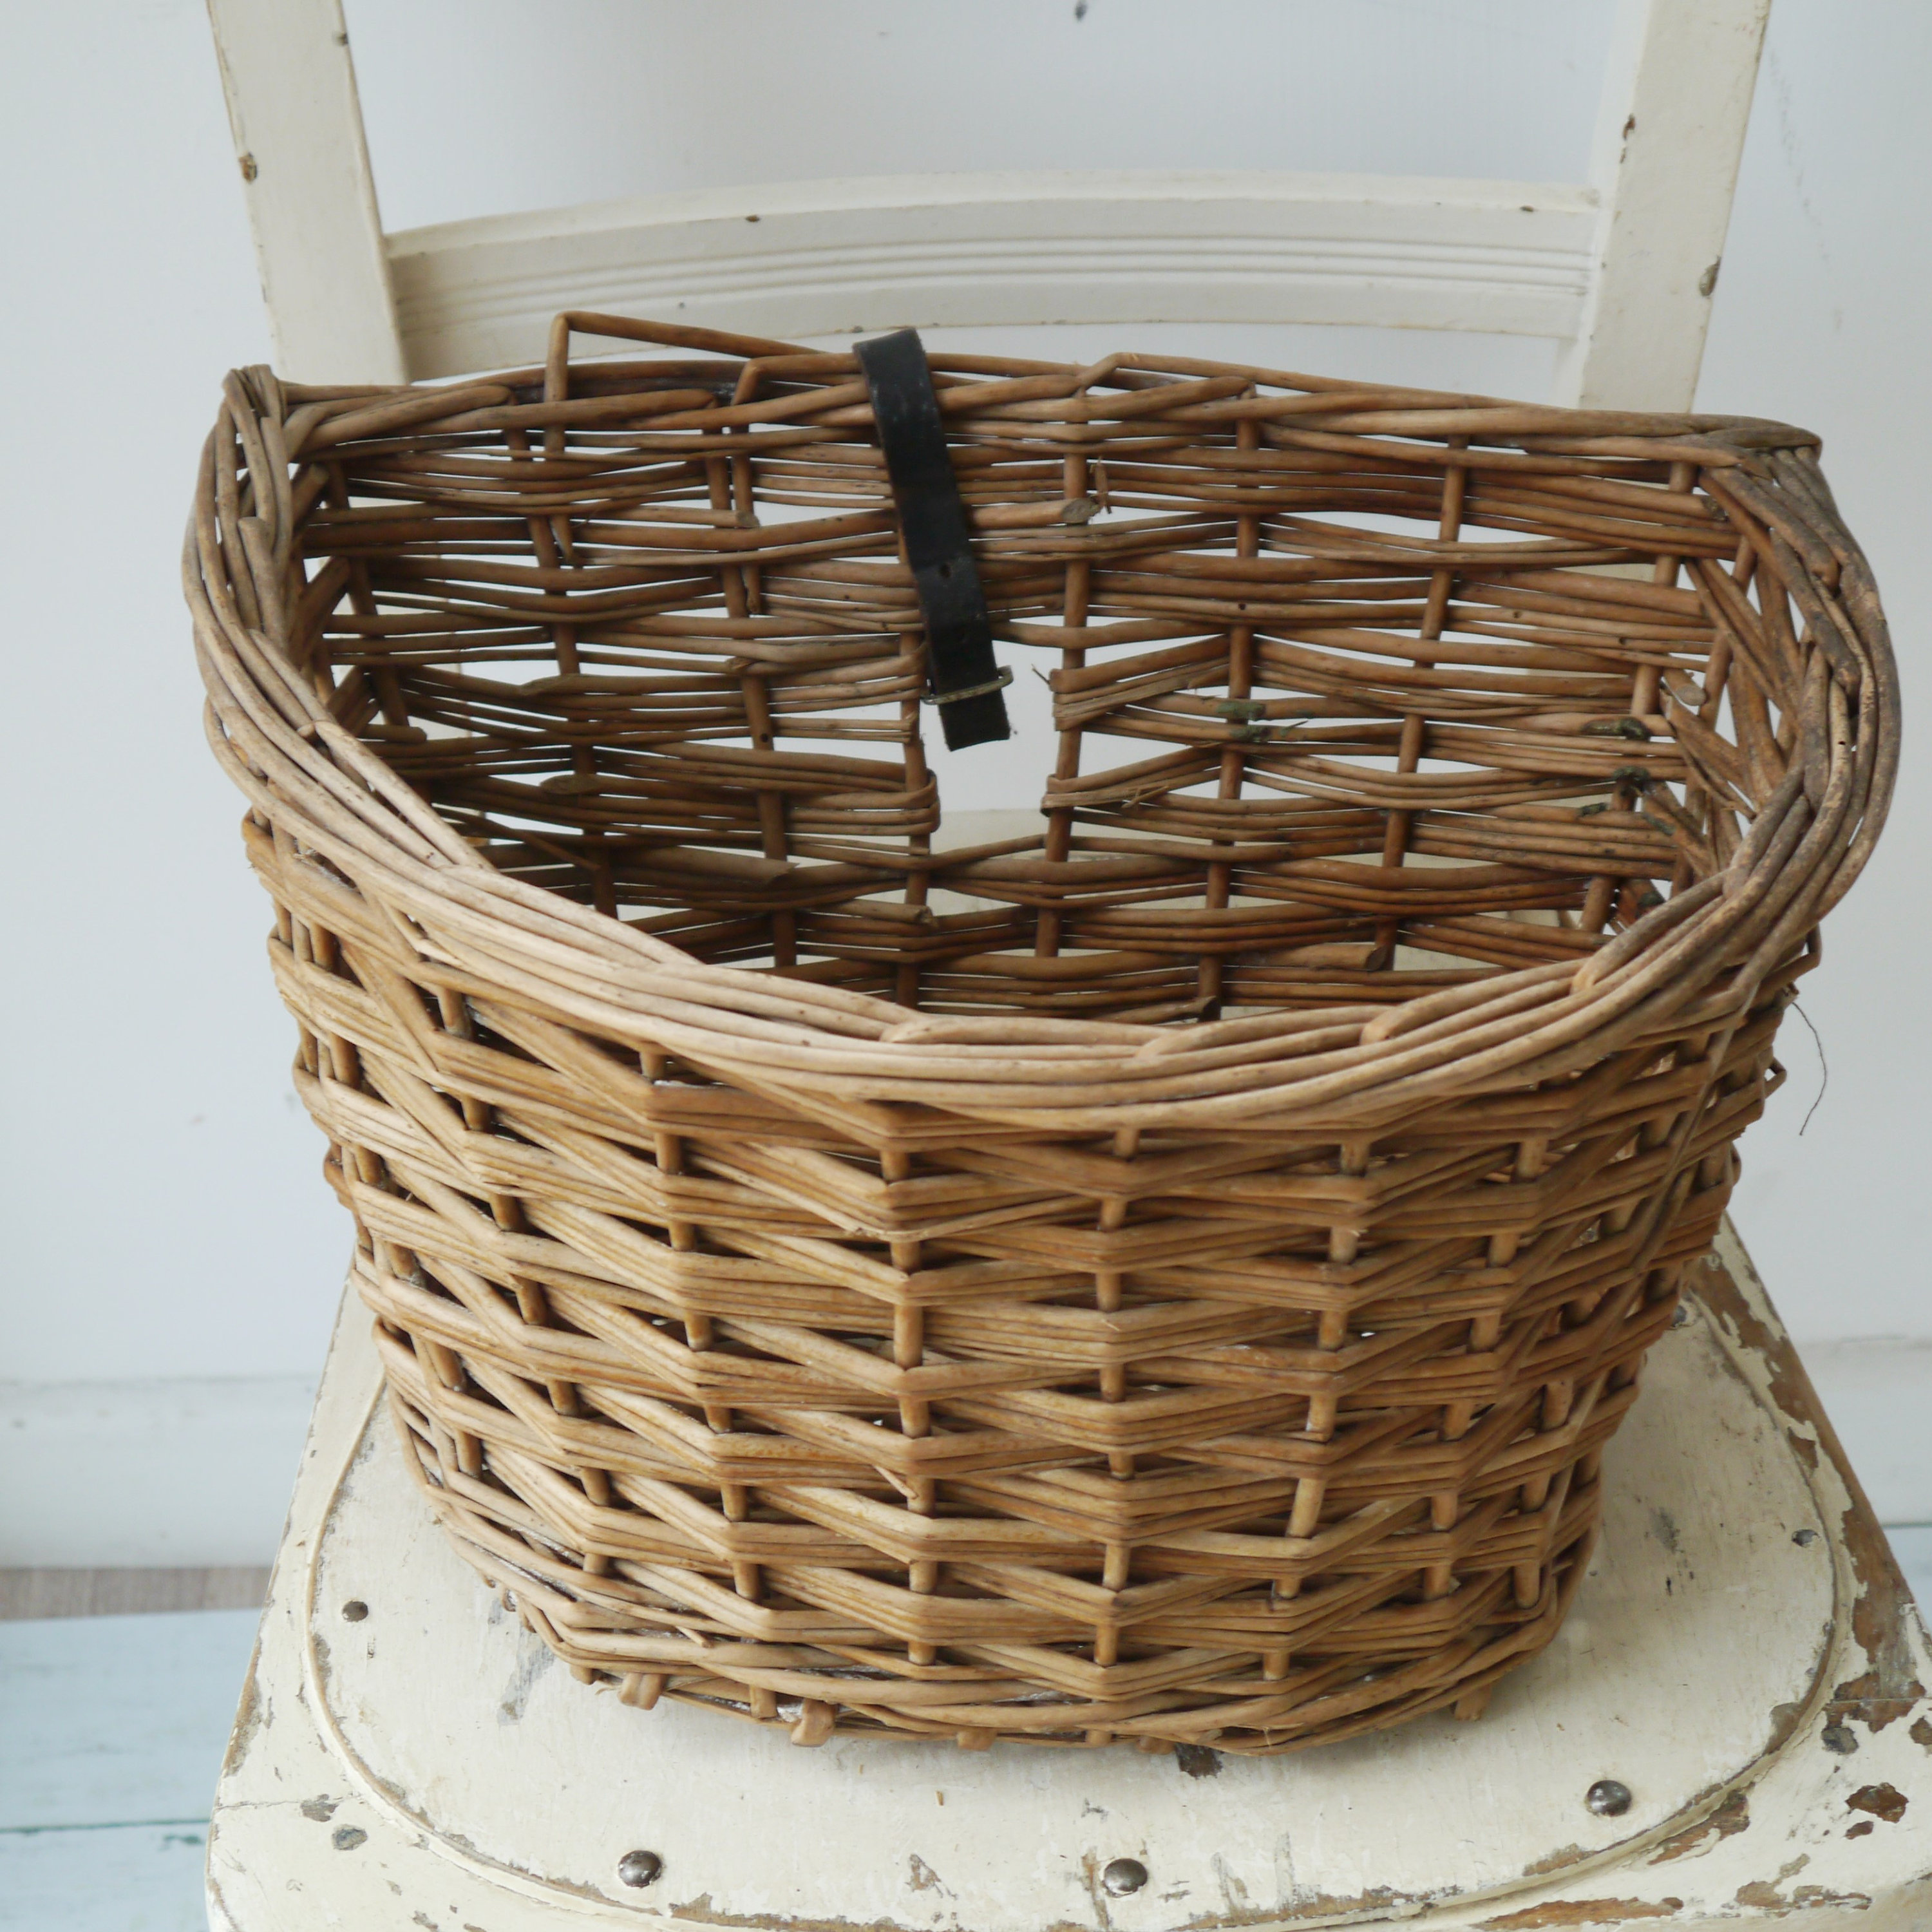 Portable Hand-Woven Shopping Basket Folk Craftsmanship Bicycle Handlebar Storage Basket with Leather Straps 